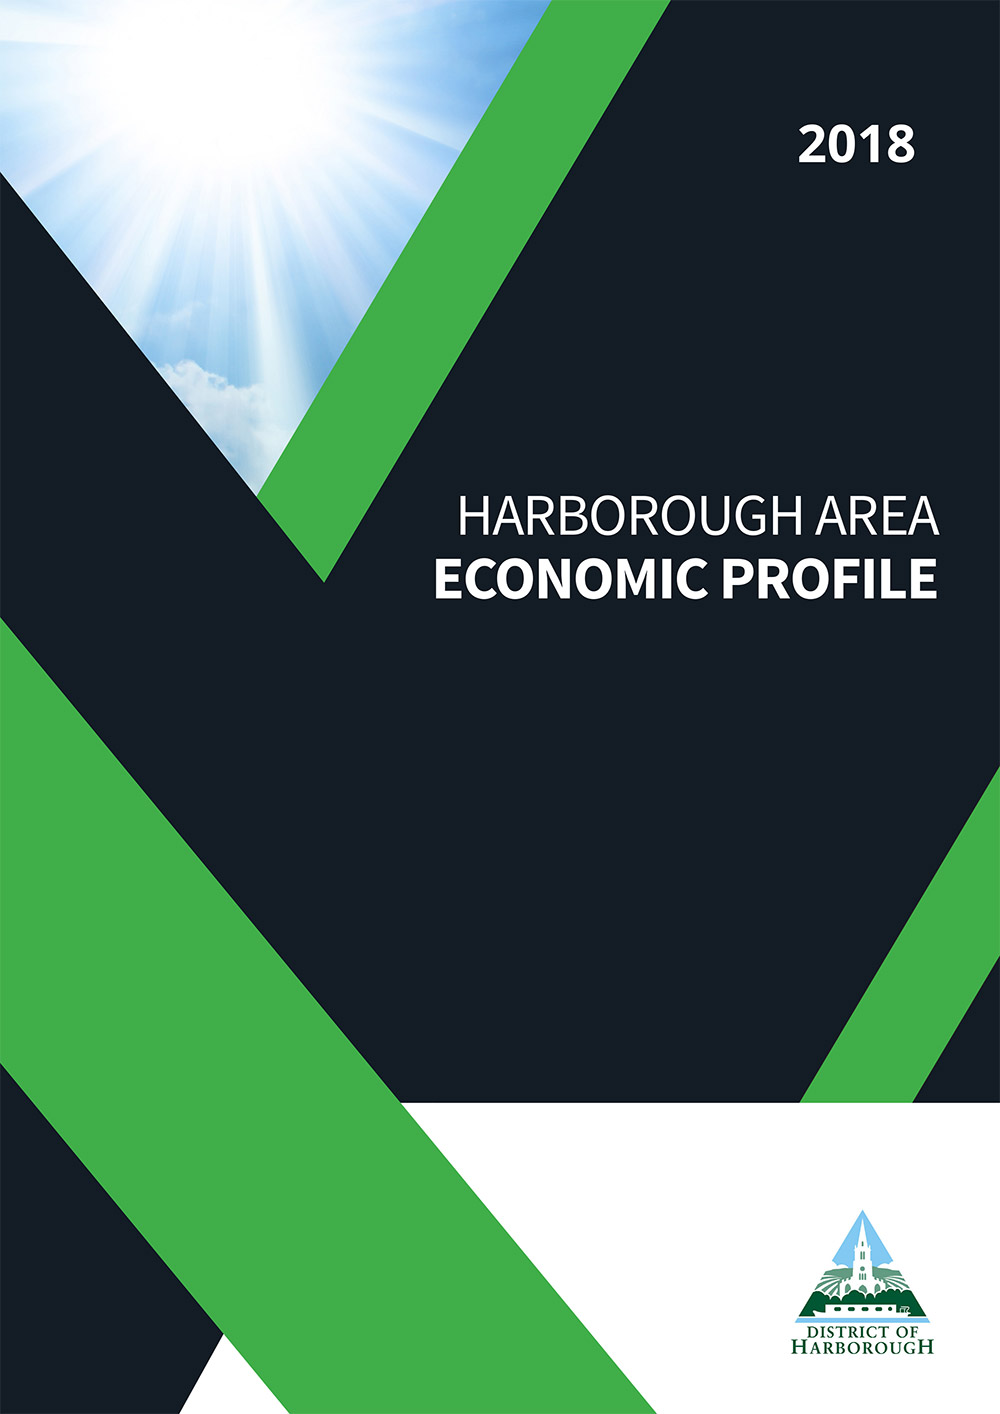 Harborough economic profile brochure